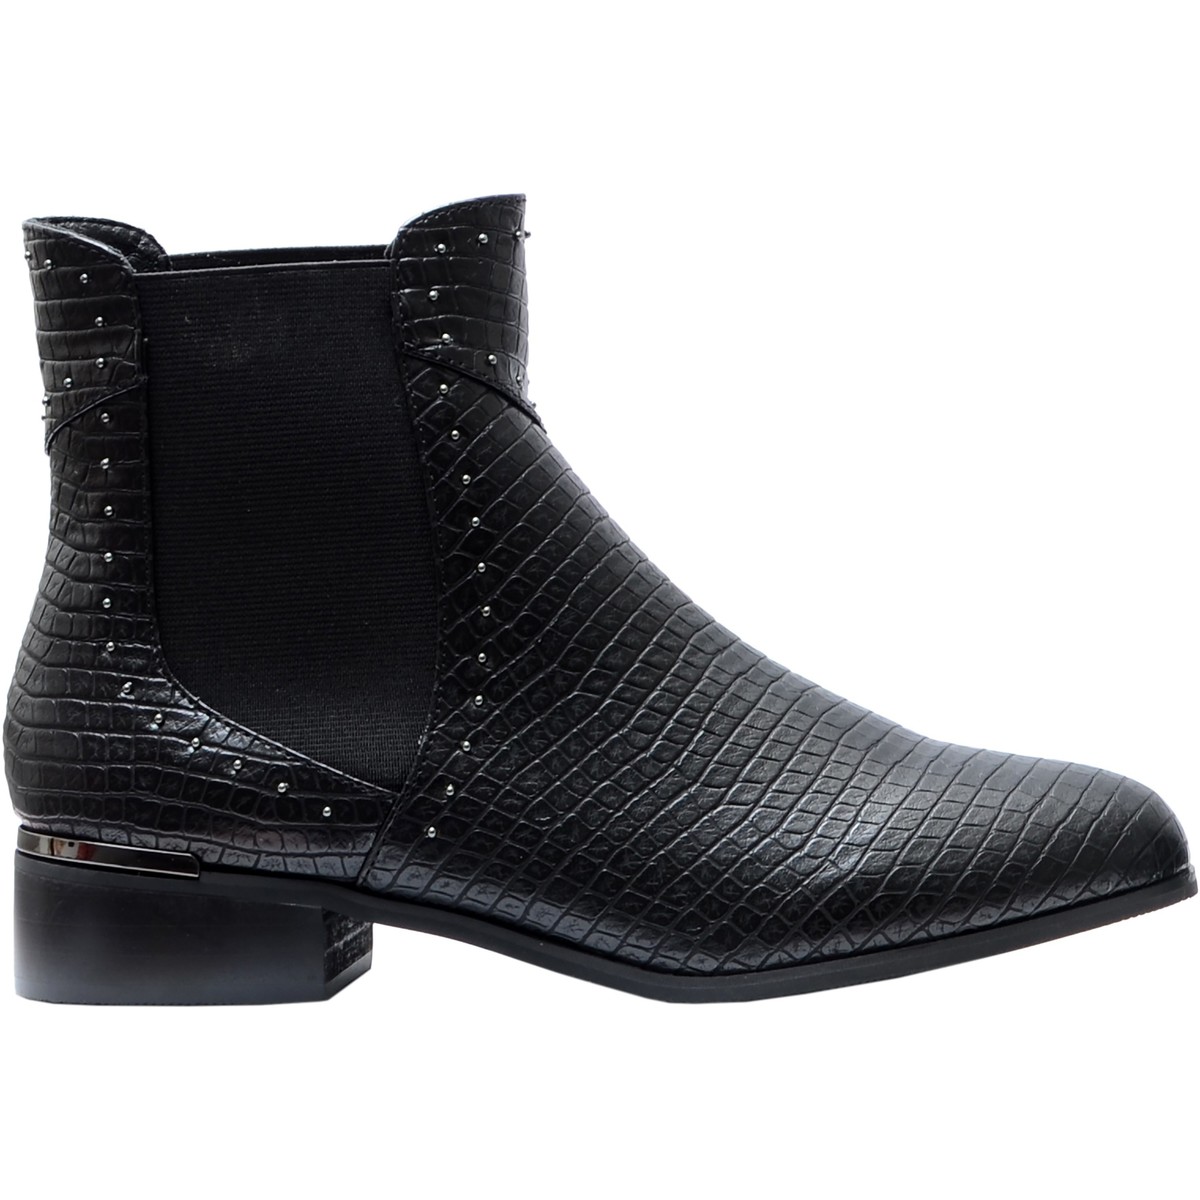 Chaussures Femme HR740006S Boots Sneakers WL574EG Griry Bottines Noir